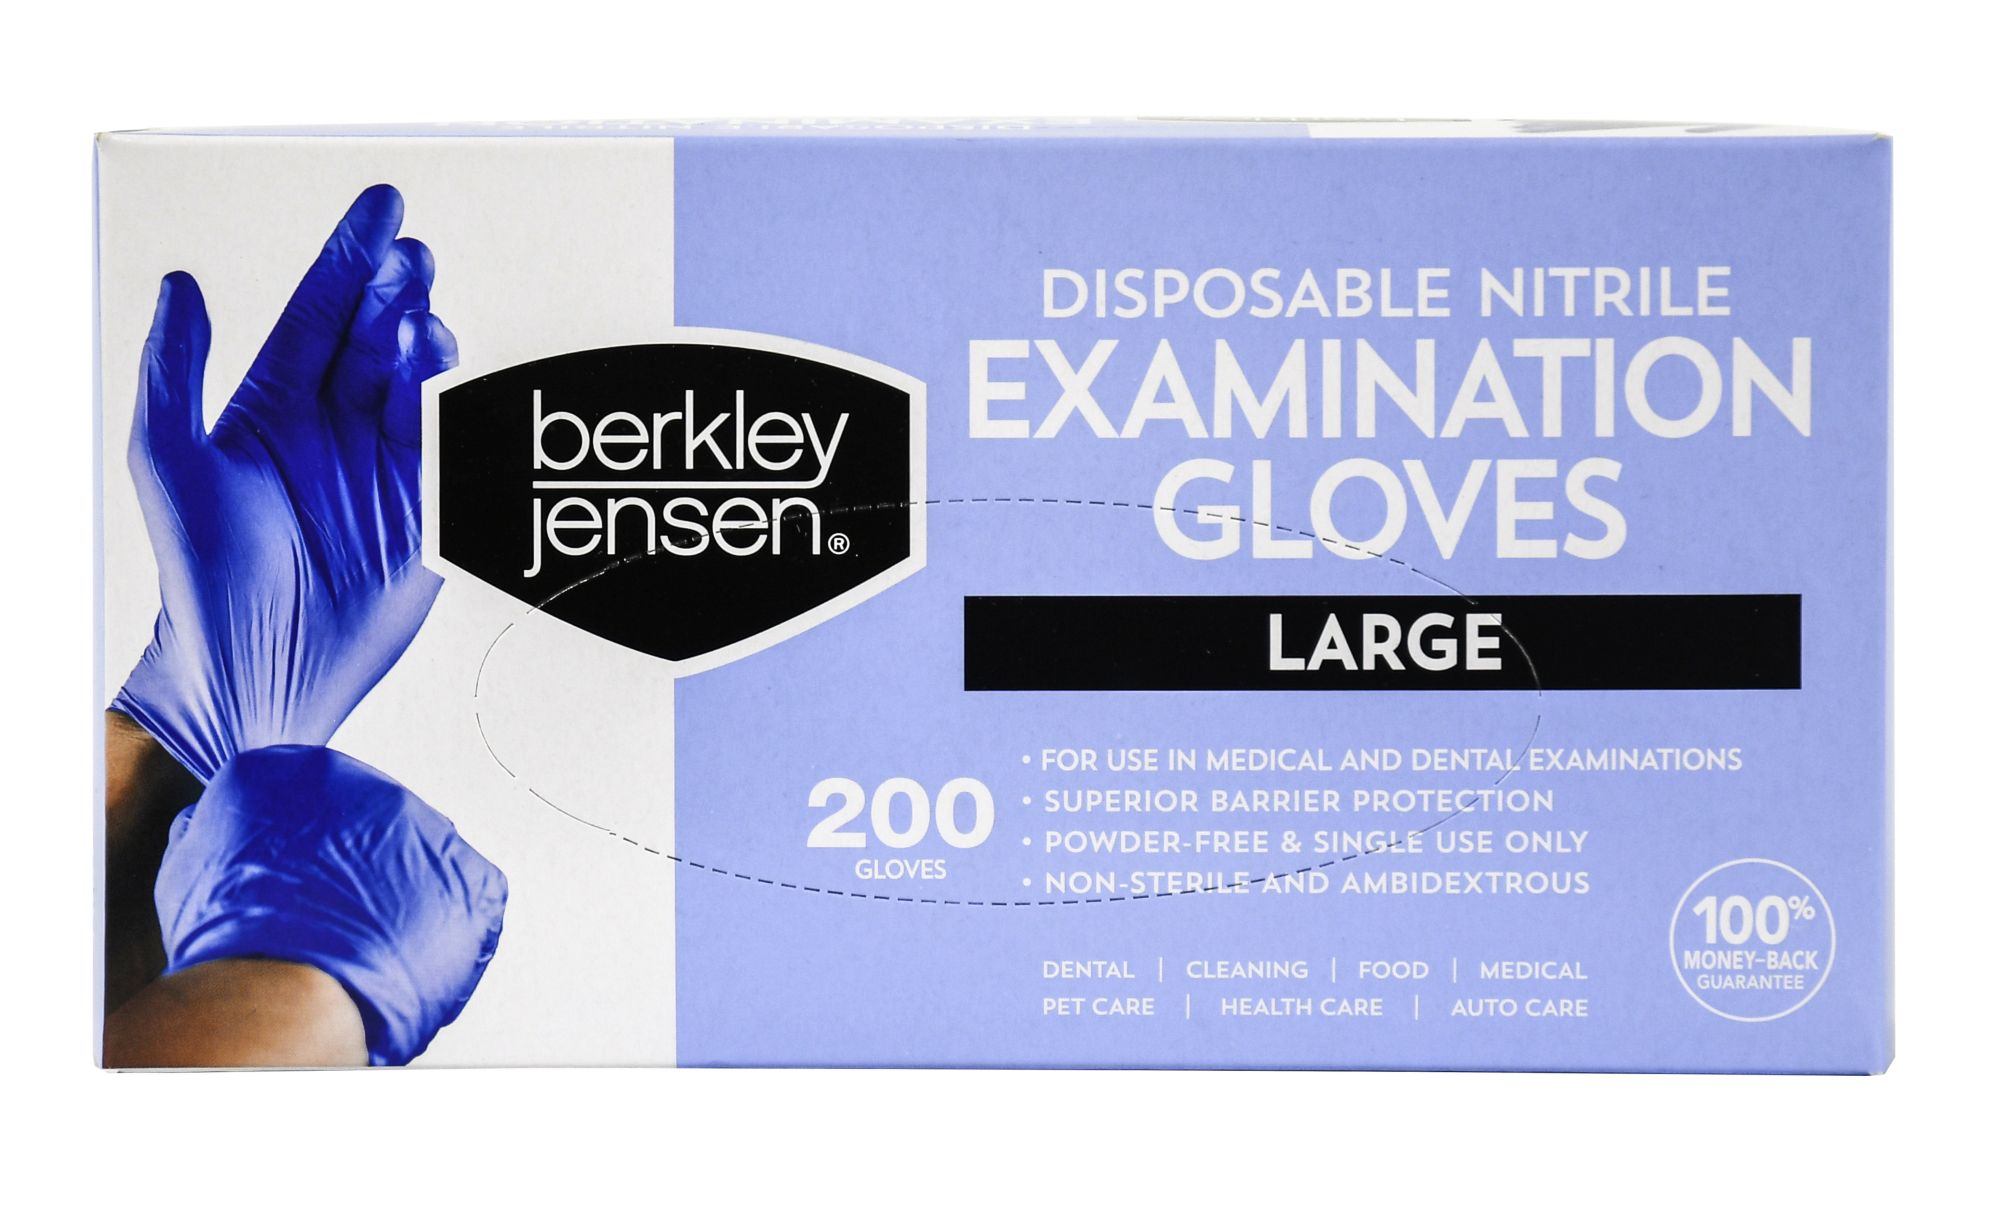 Berkley Jensen Large Disposable Nitrile Gloves, 200 ct. - Indigo